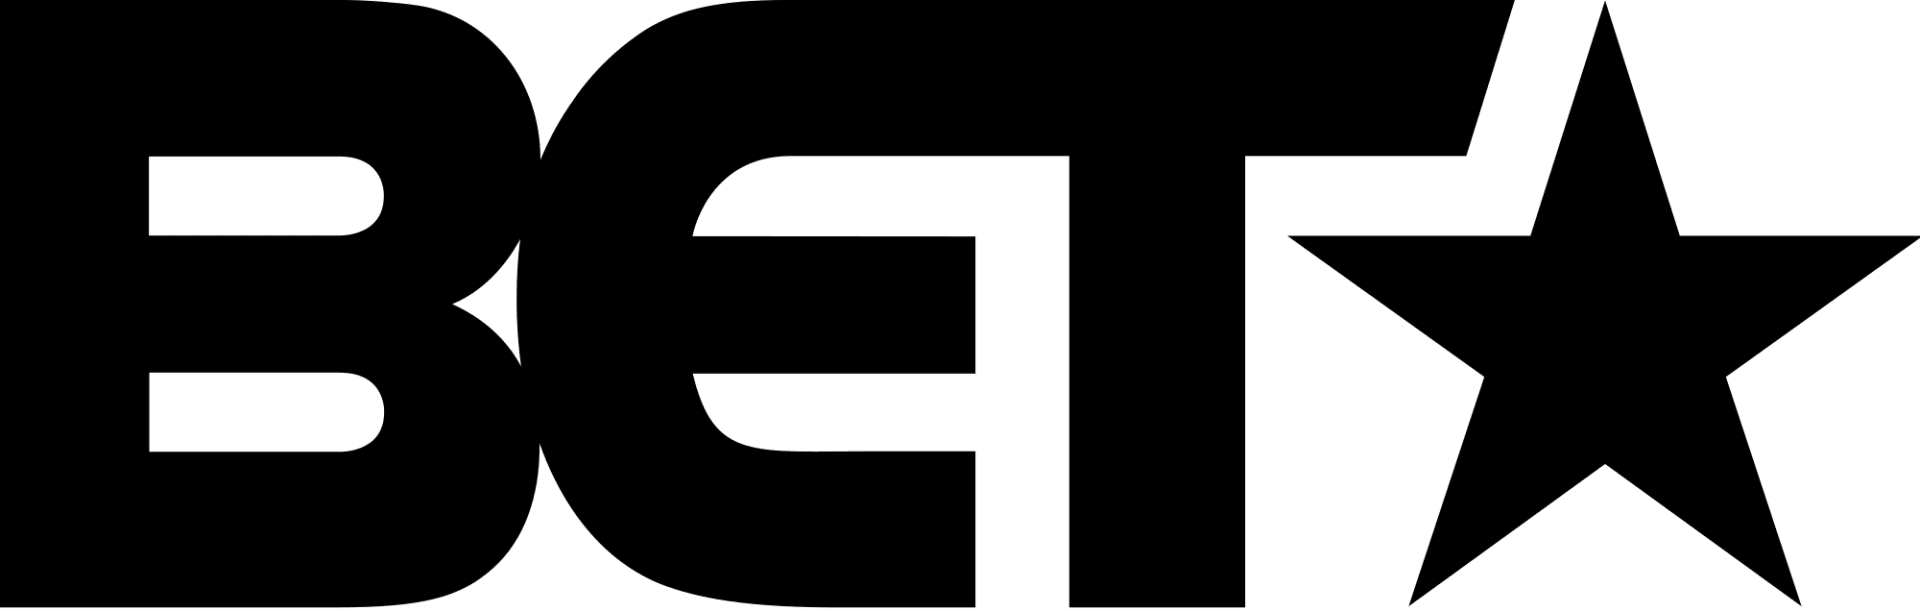 BET_Logo.svg - Cynopsis Media